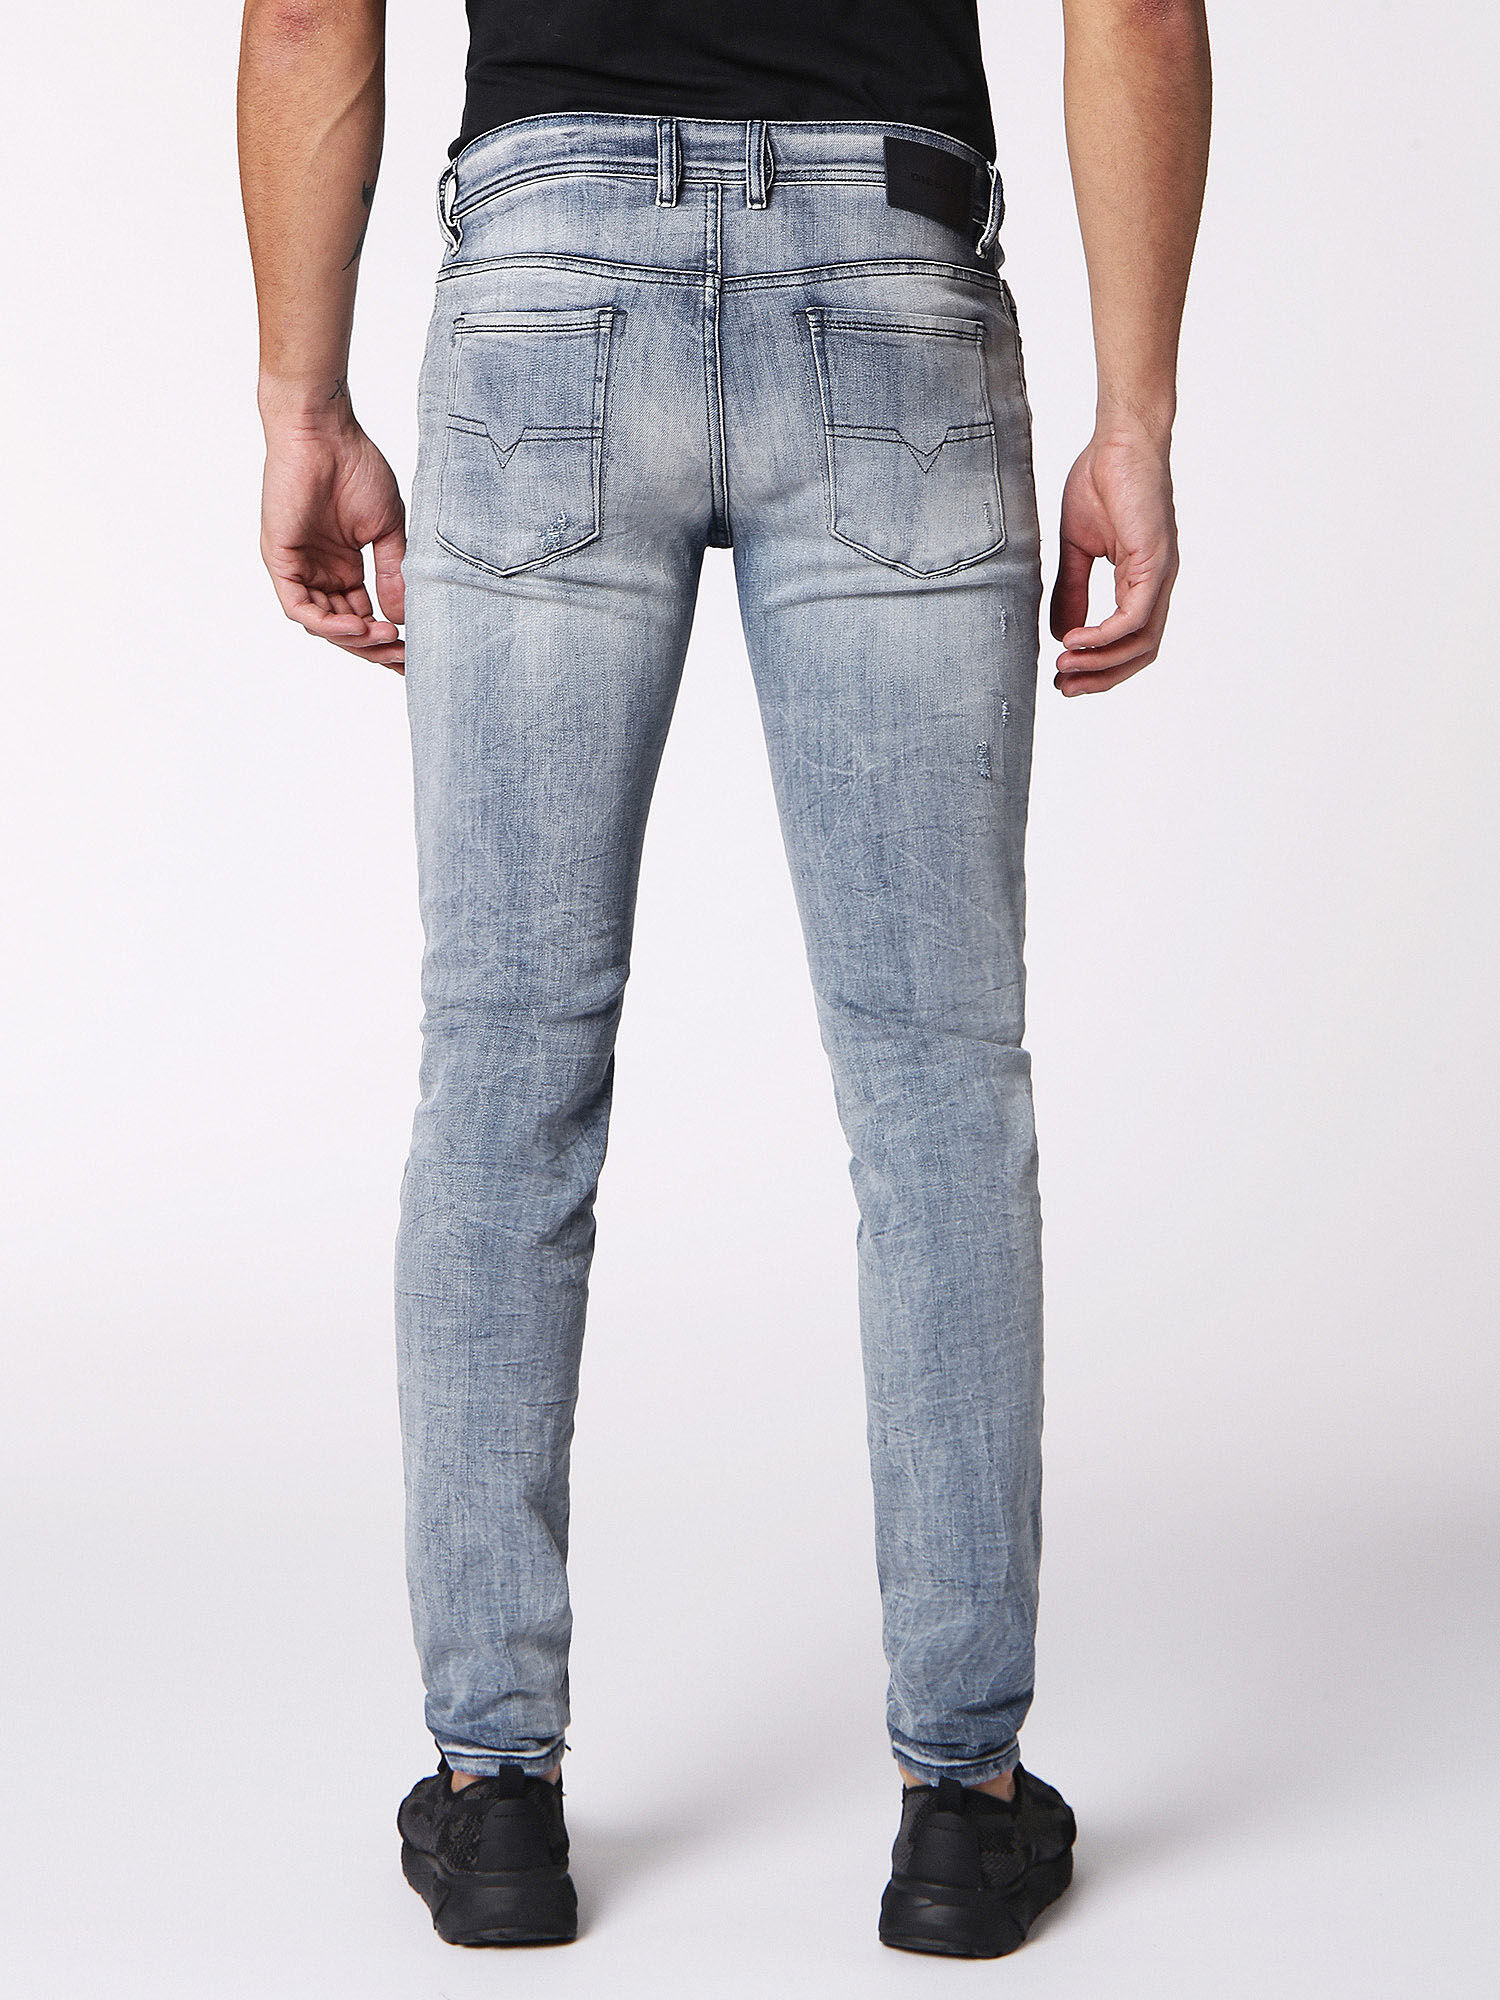 tendencia jeans 2020